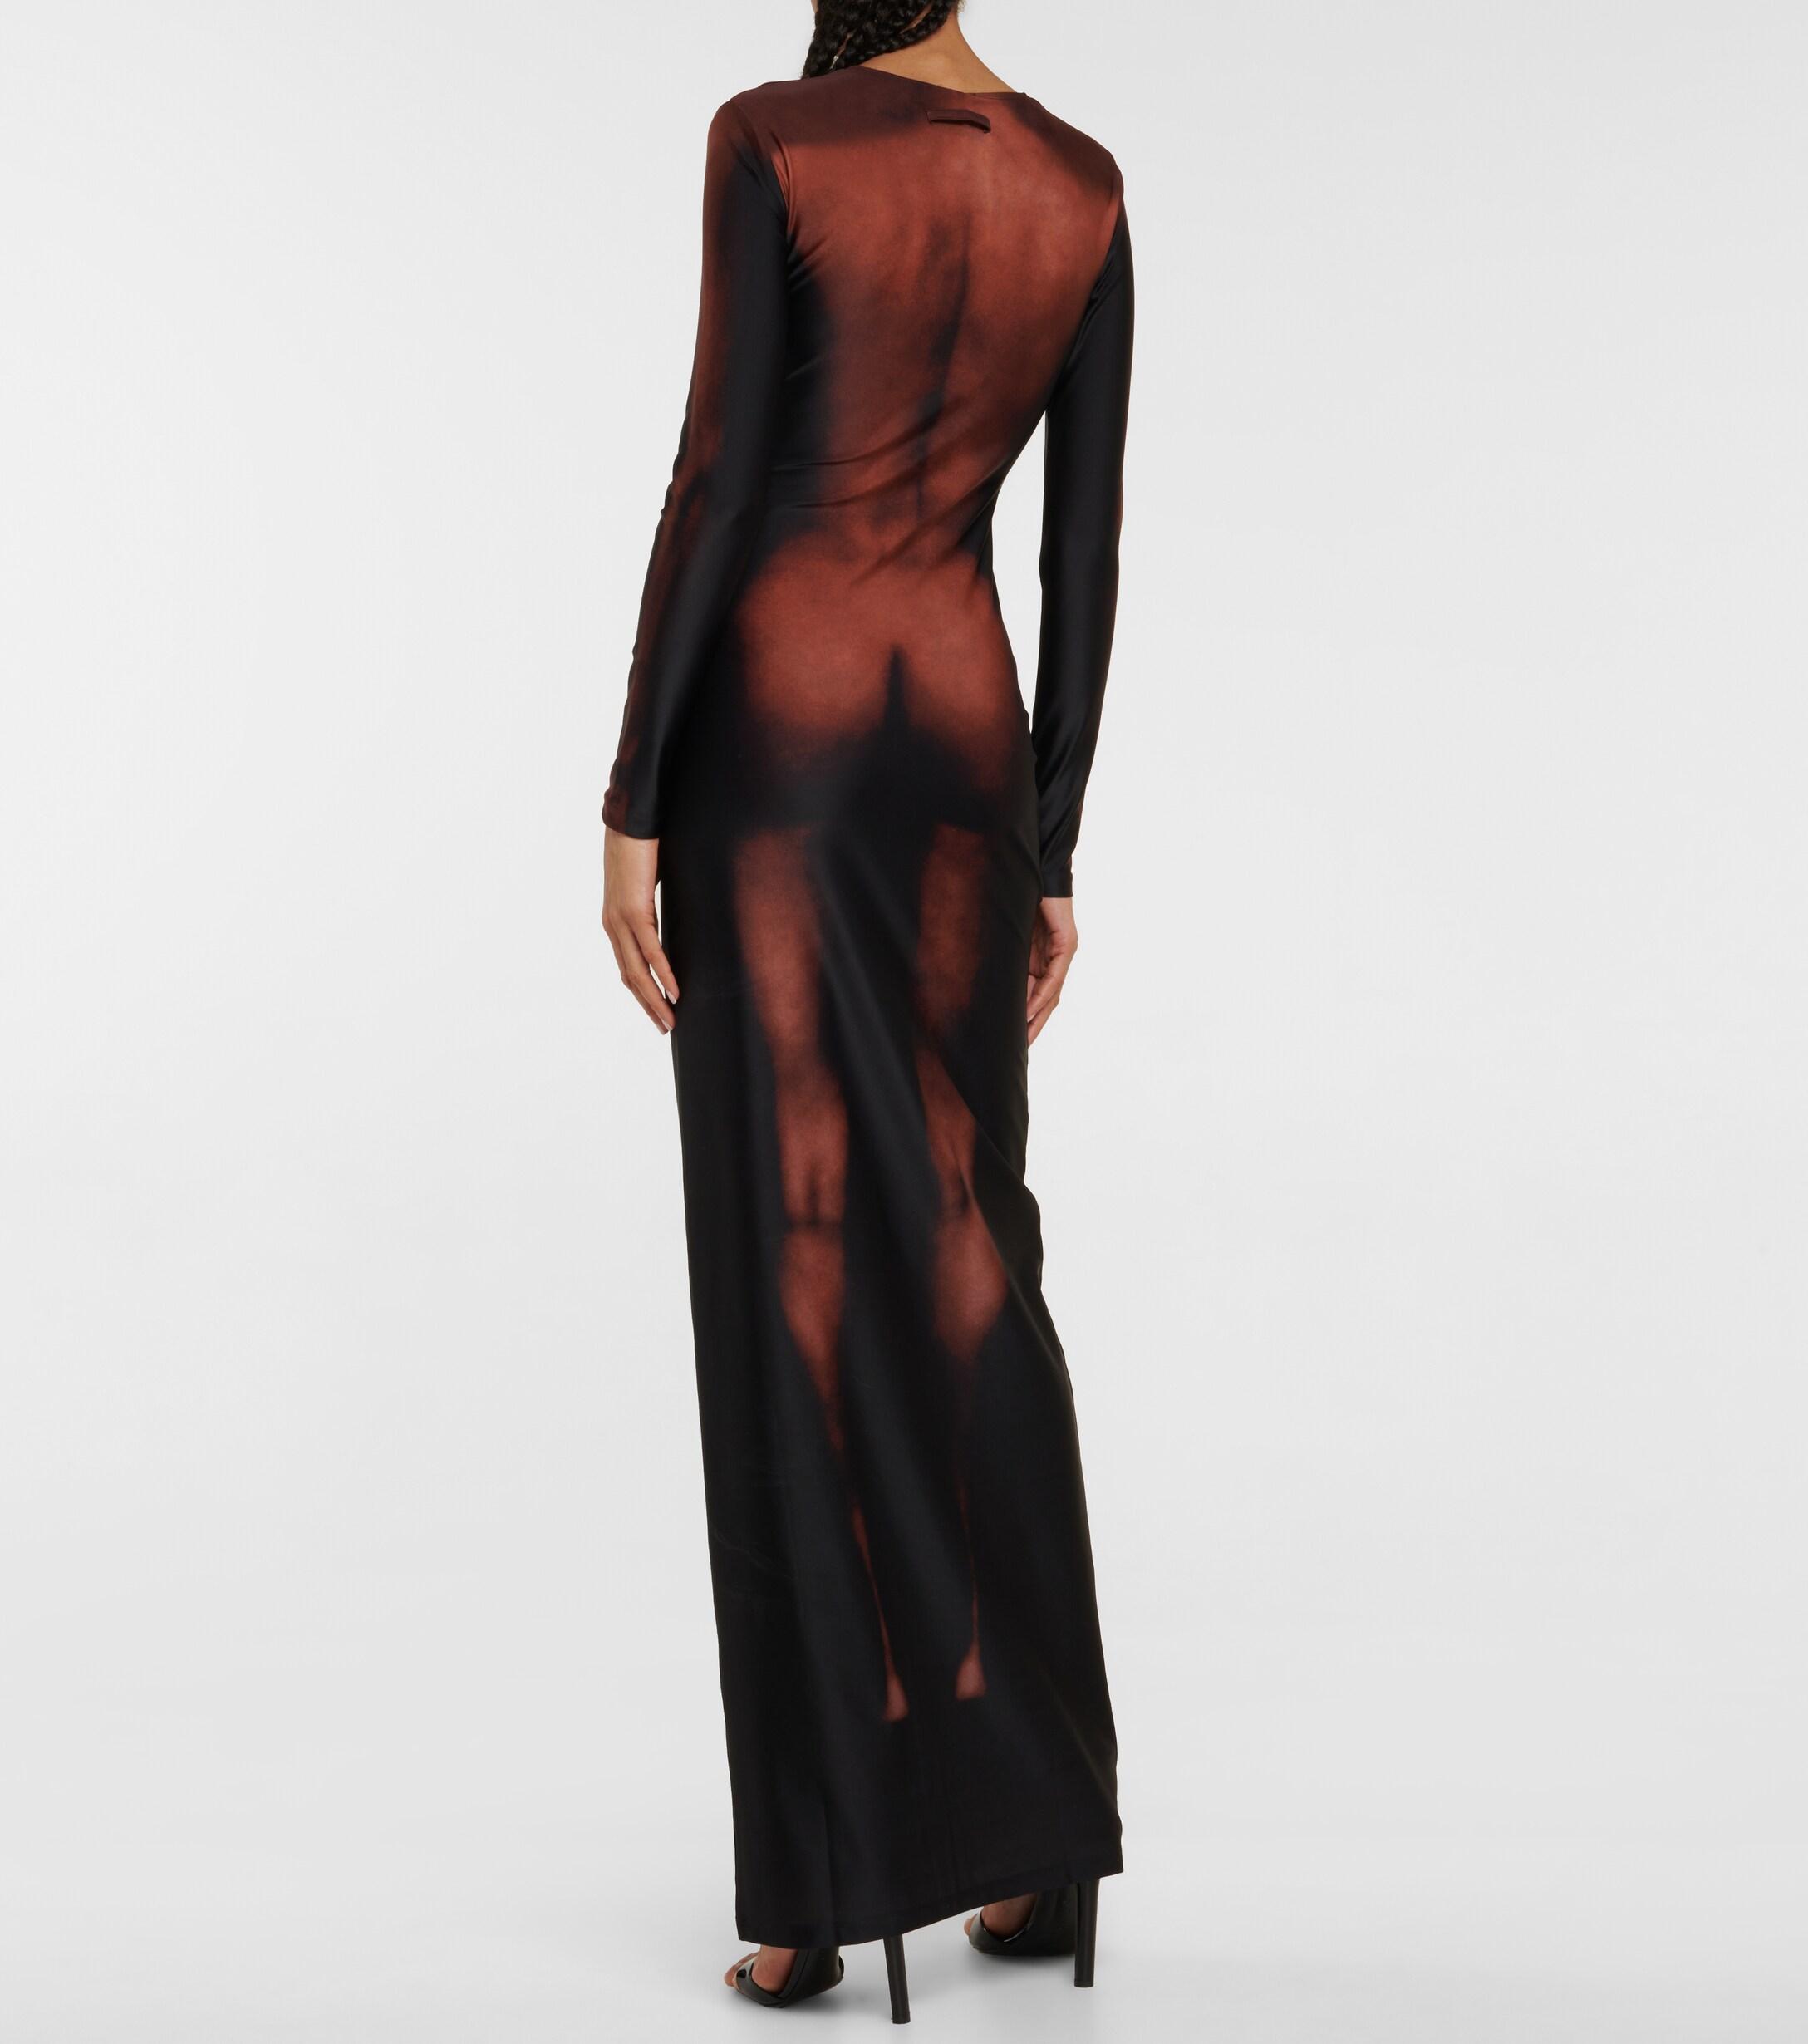 Jean Paul Gaultier X Lotta Volkova Sleeveless Printed Maxi Dress